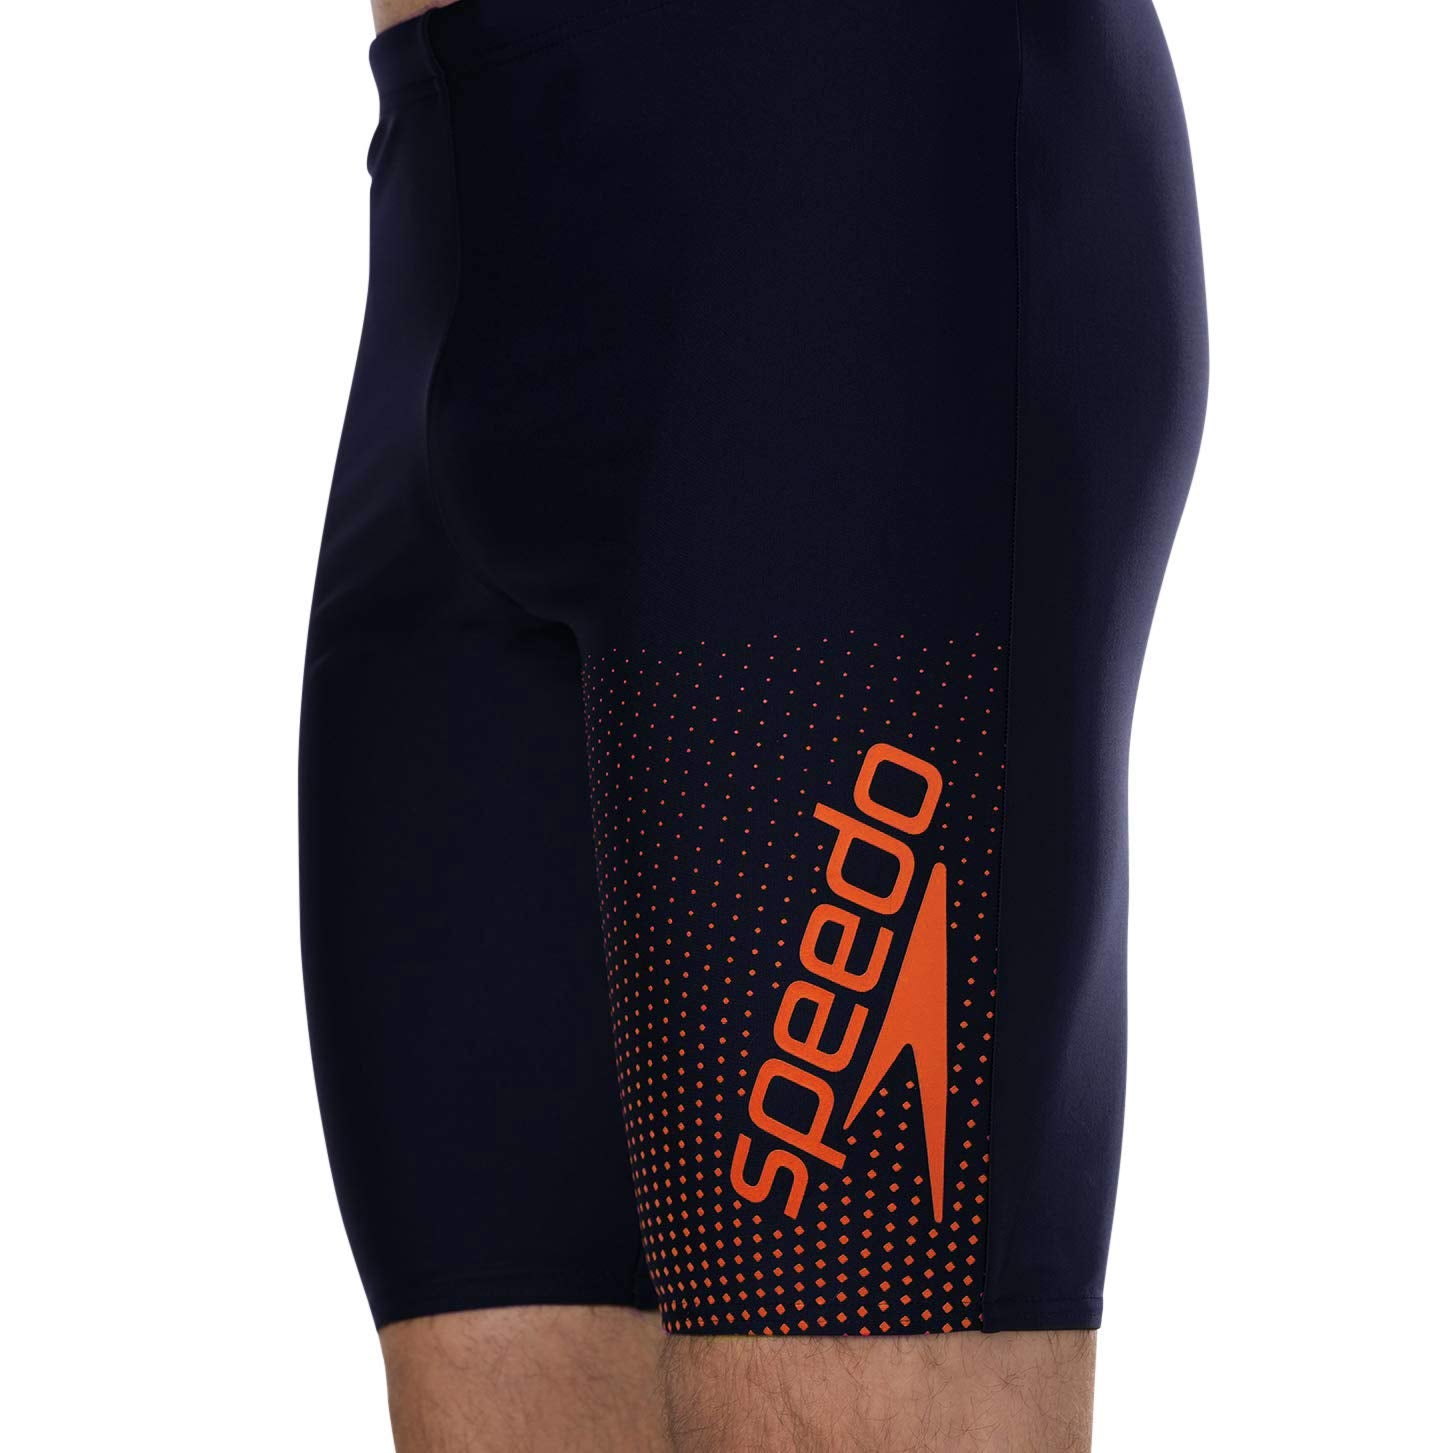 Speedo Gala Logo Swimming Jammer for Men, Navy/Pure Orange - Best Price online Prokicksports.com